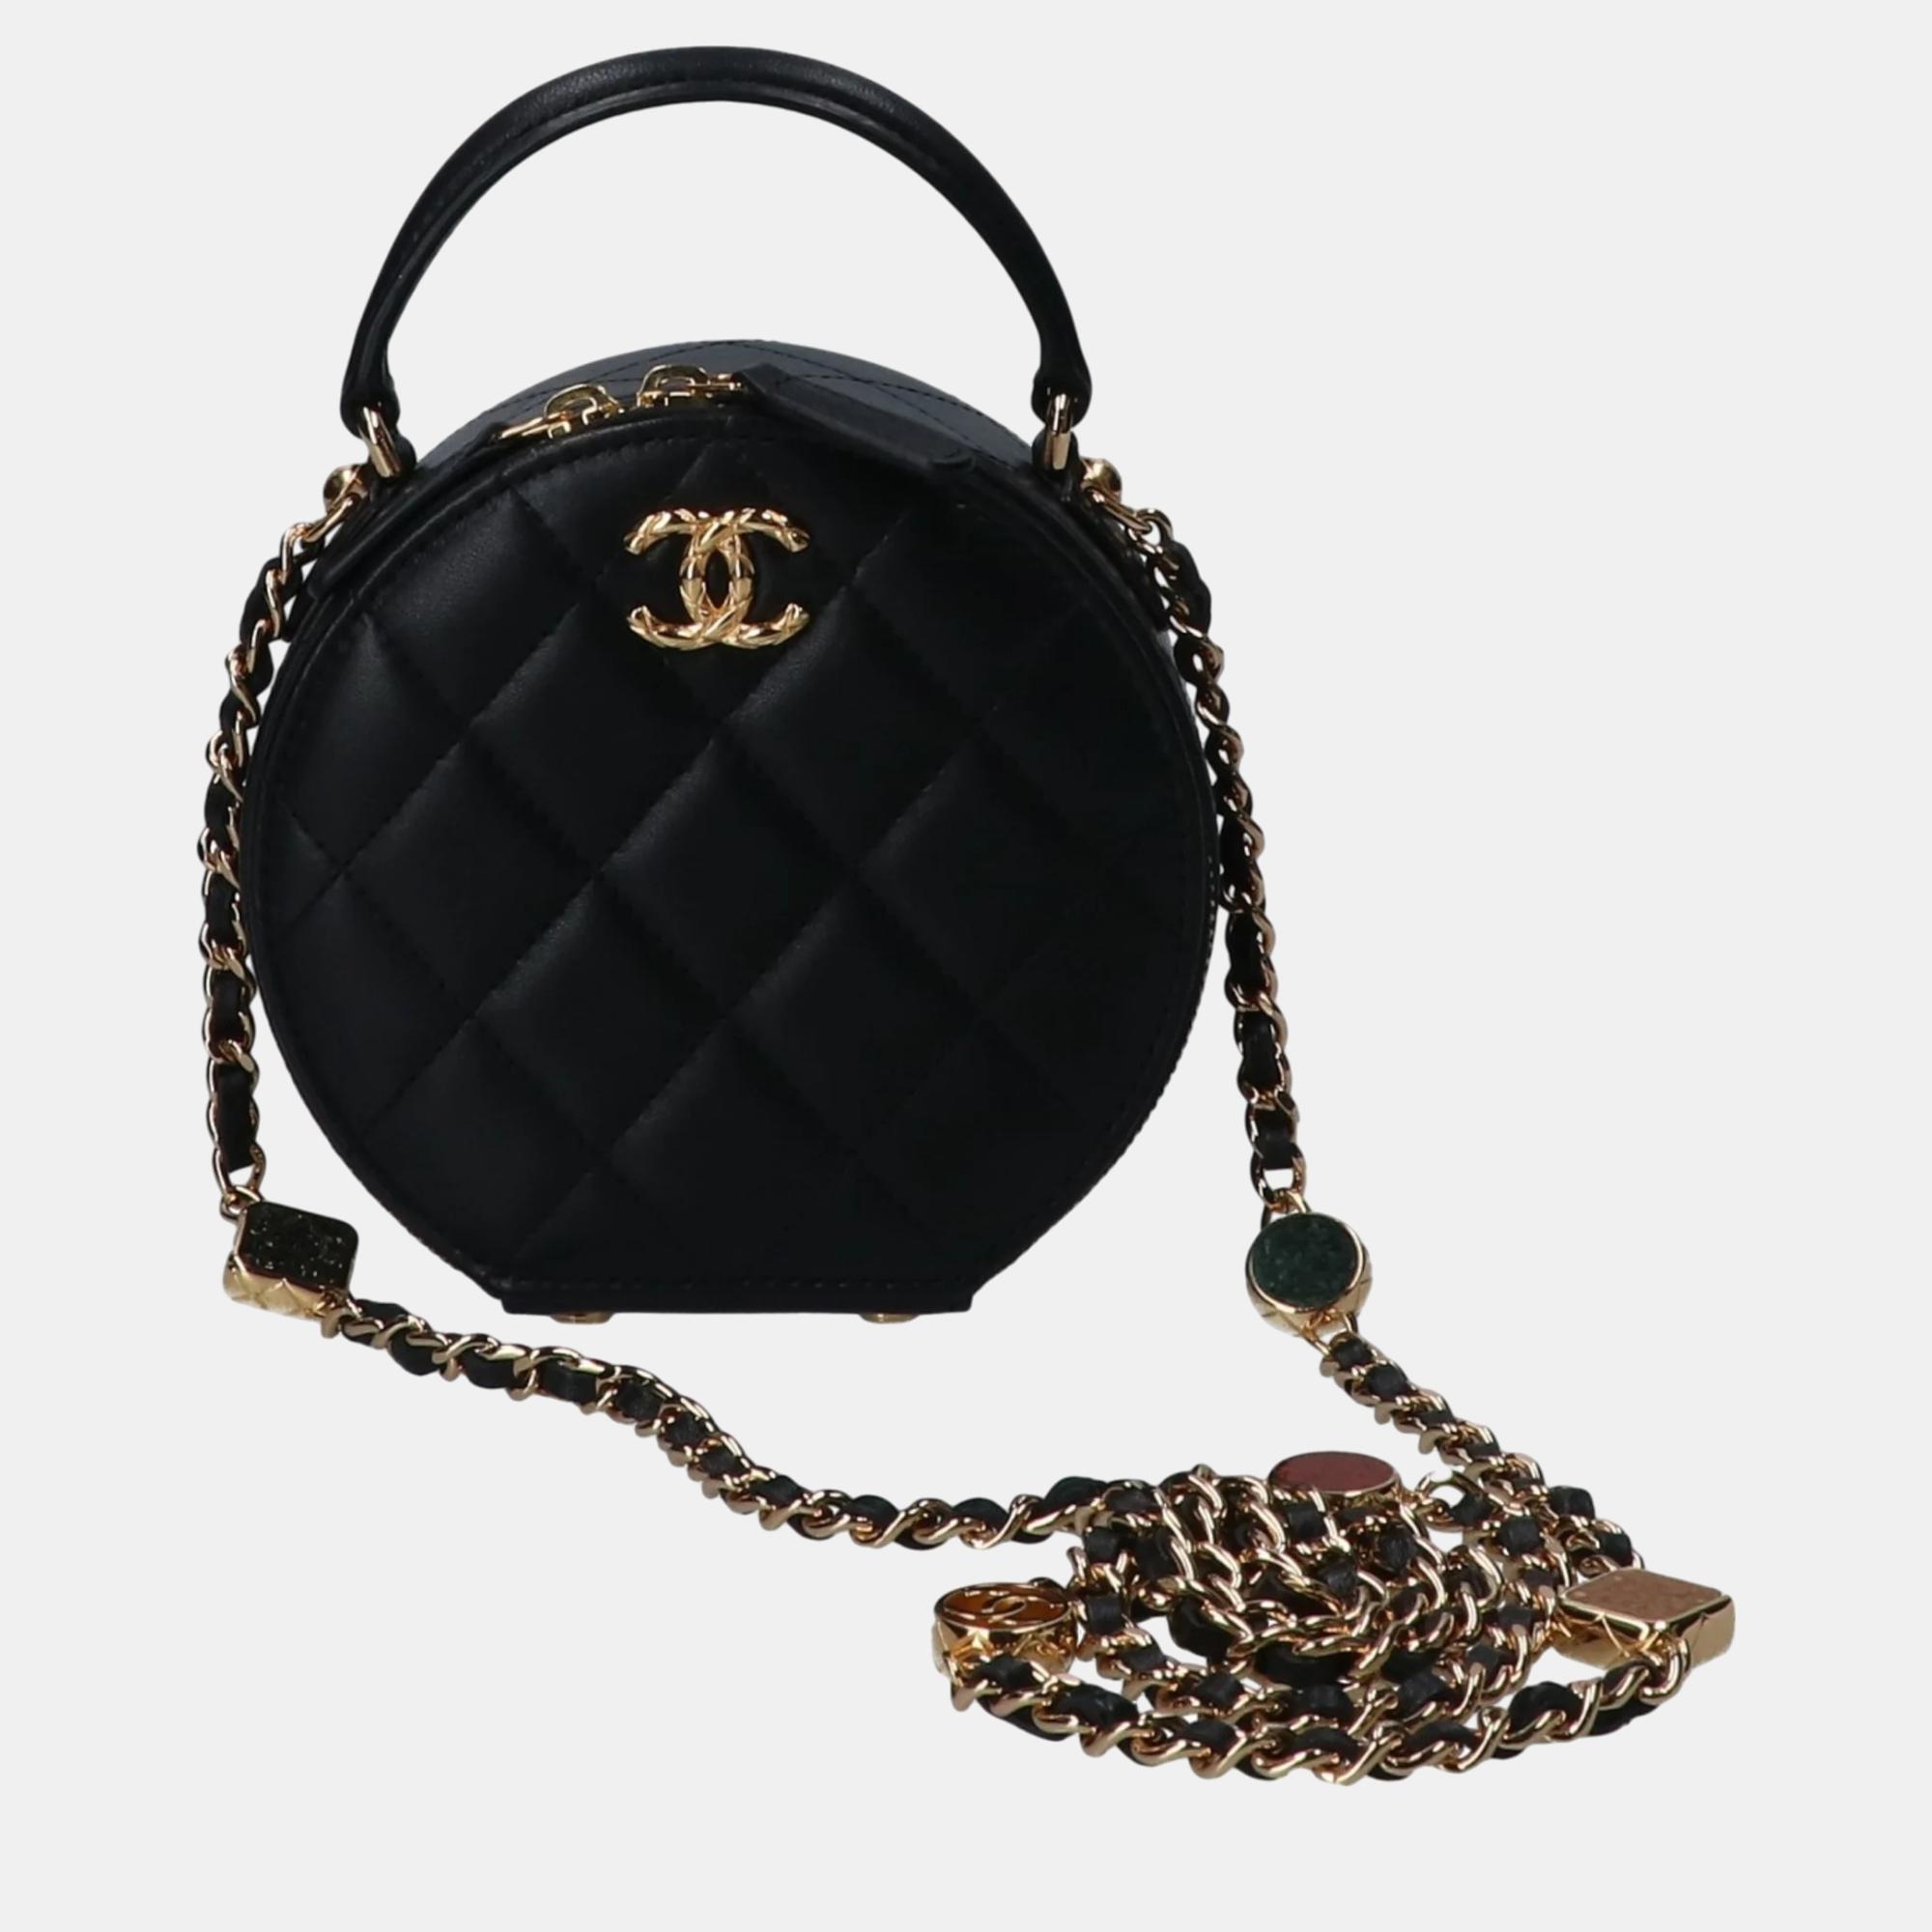 Chanel black leather round small vanity case shoulder bag